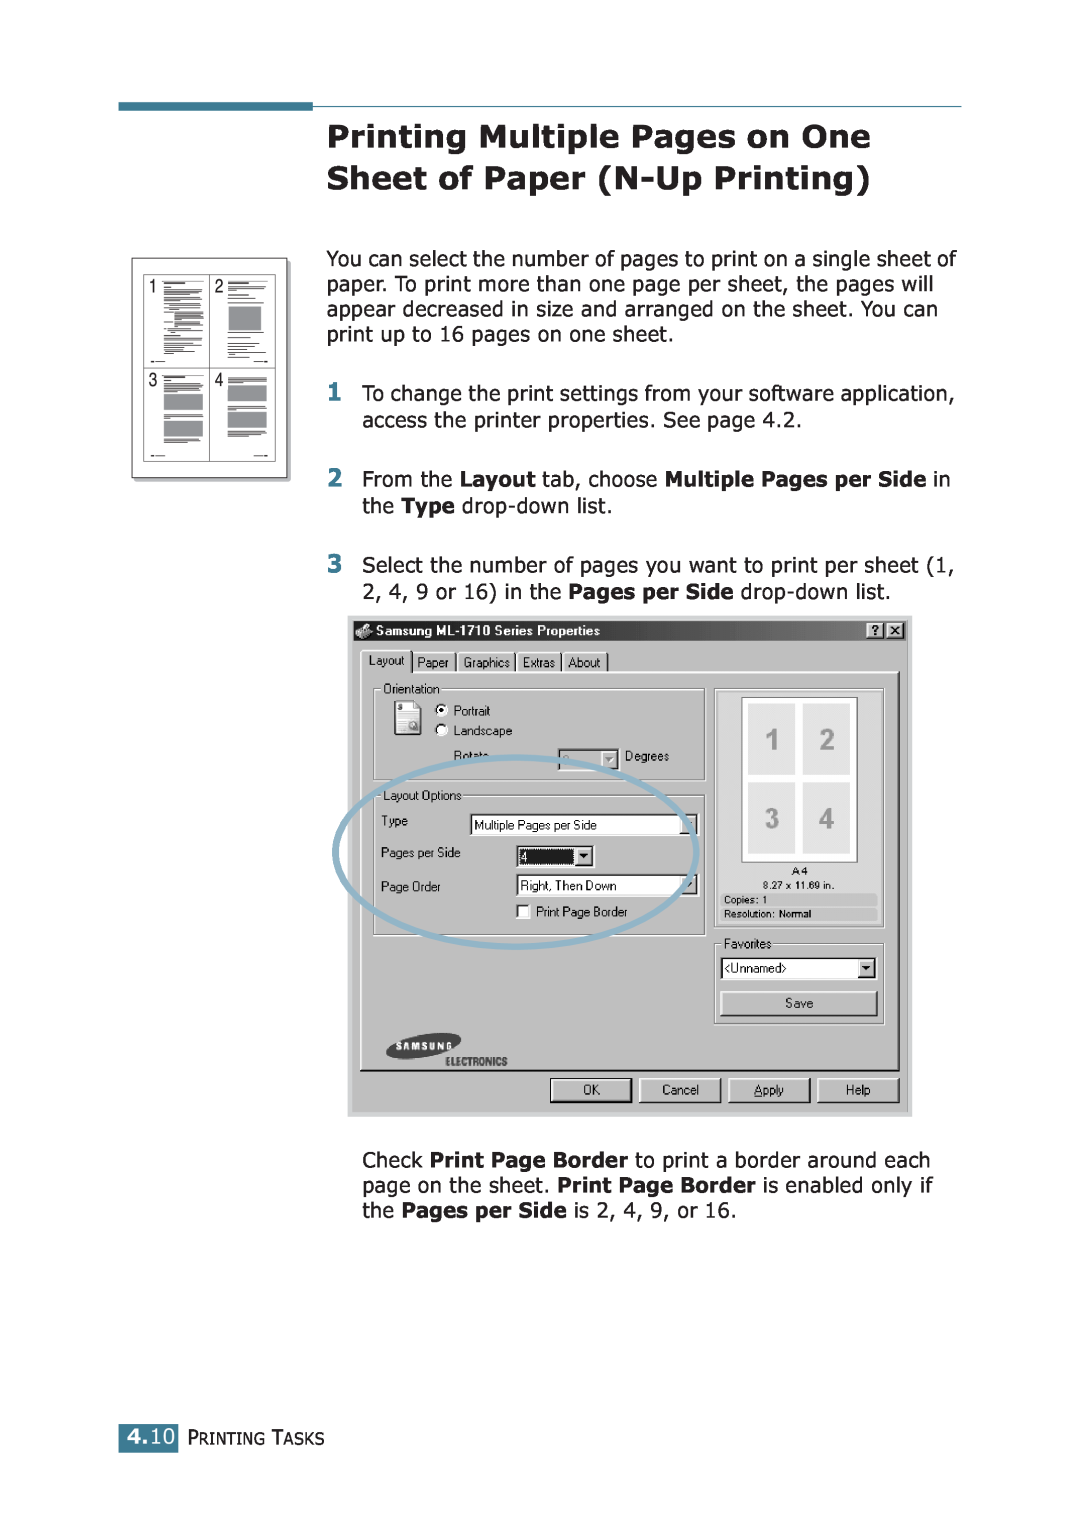 Samsung ML-1710P manual Printing Multiple Pages on One Sheet of Paper N-Up Printing, Printing Tasks 